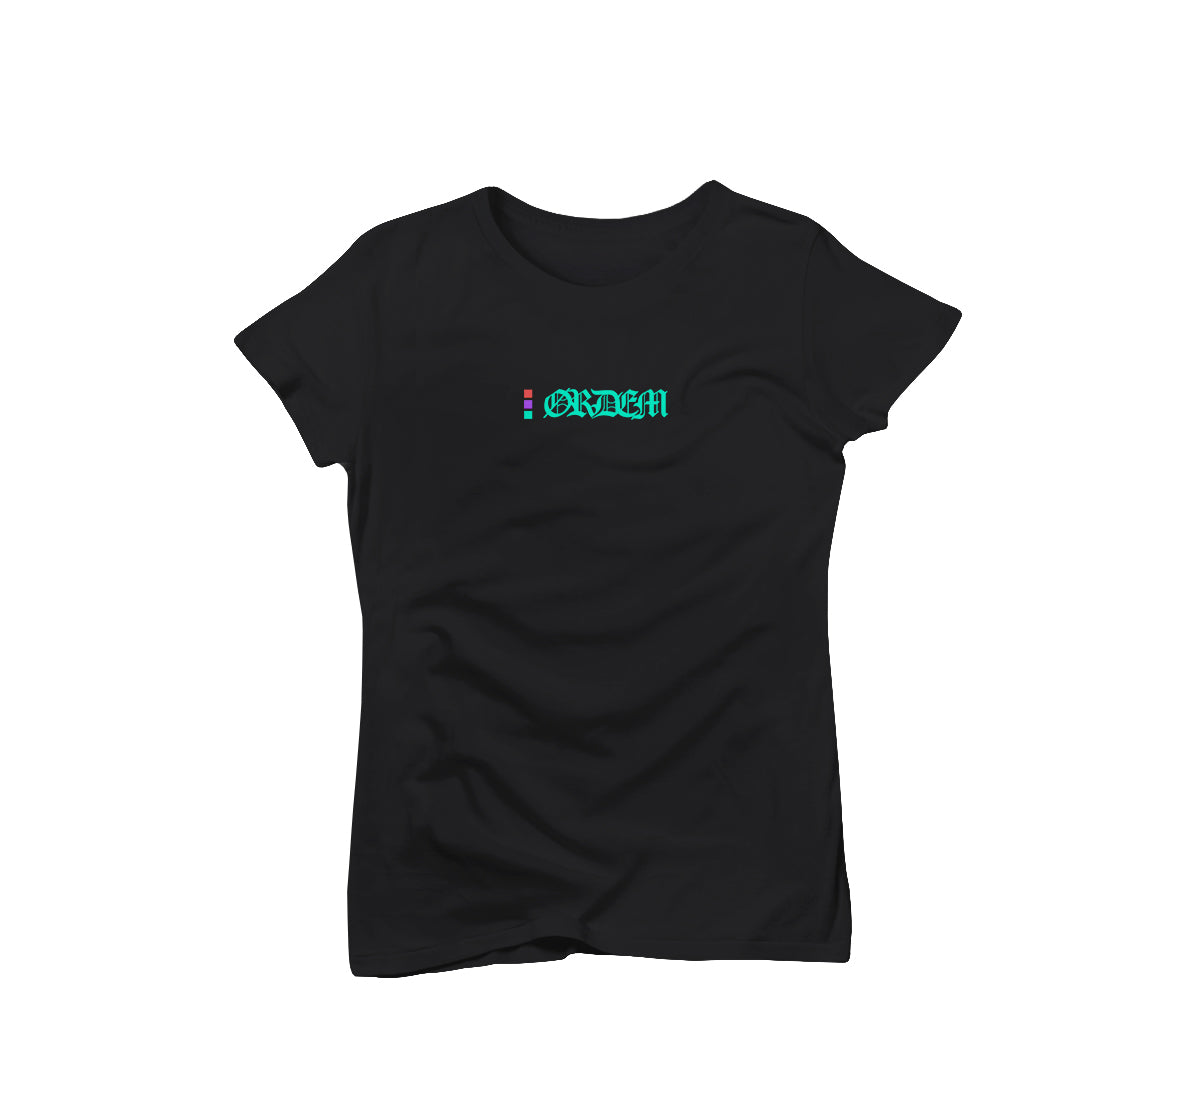 ORDEM "Losing Sleep" Black T-Shirt Women